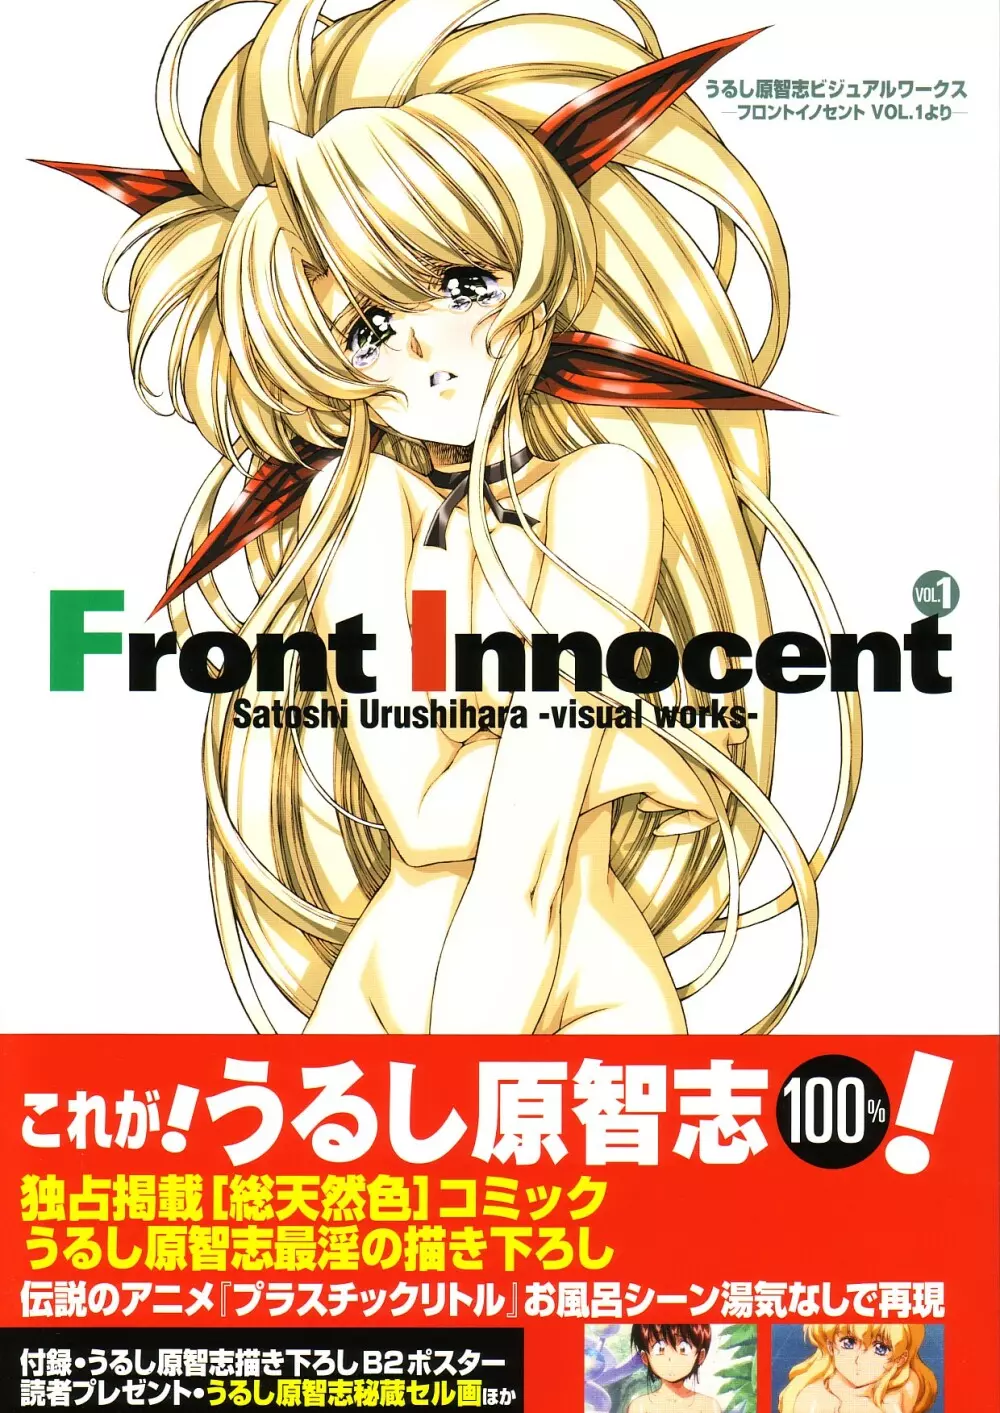 Front Innocent #1: Satoshi Urushihara Visual Works Page.1